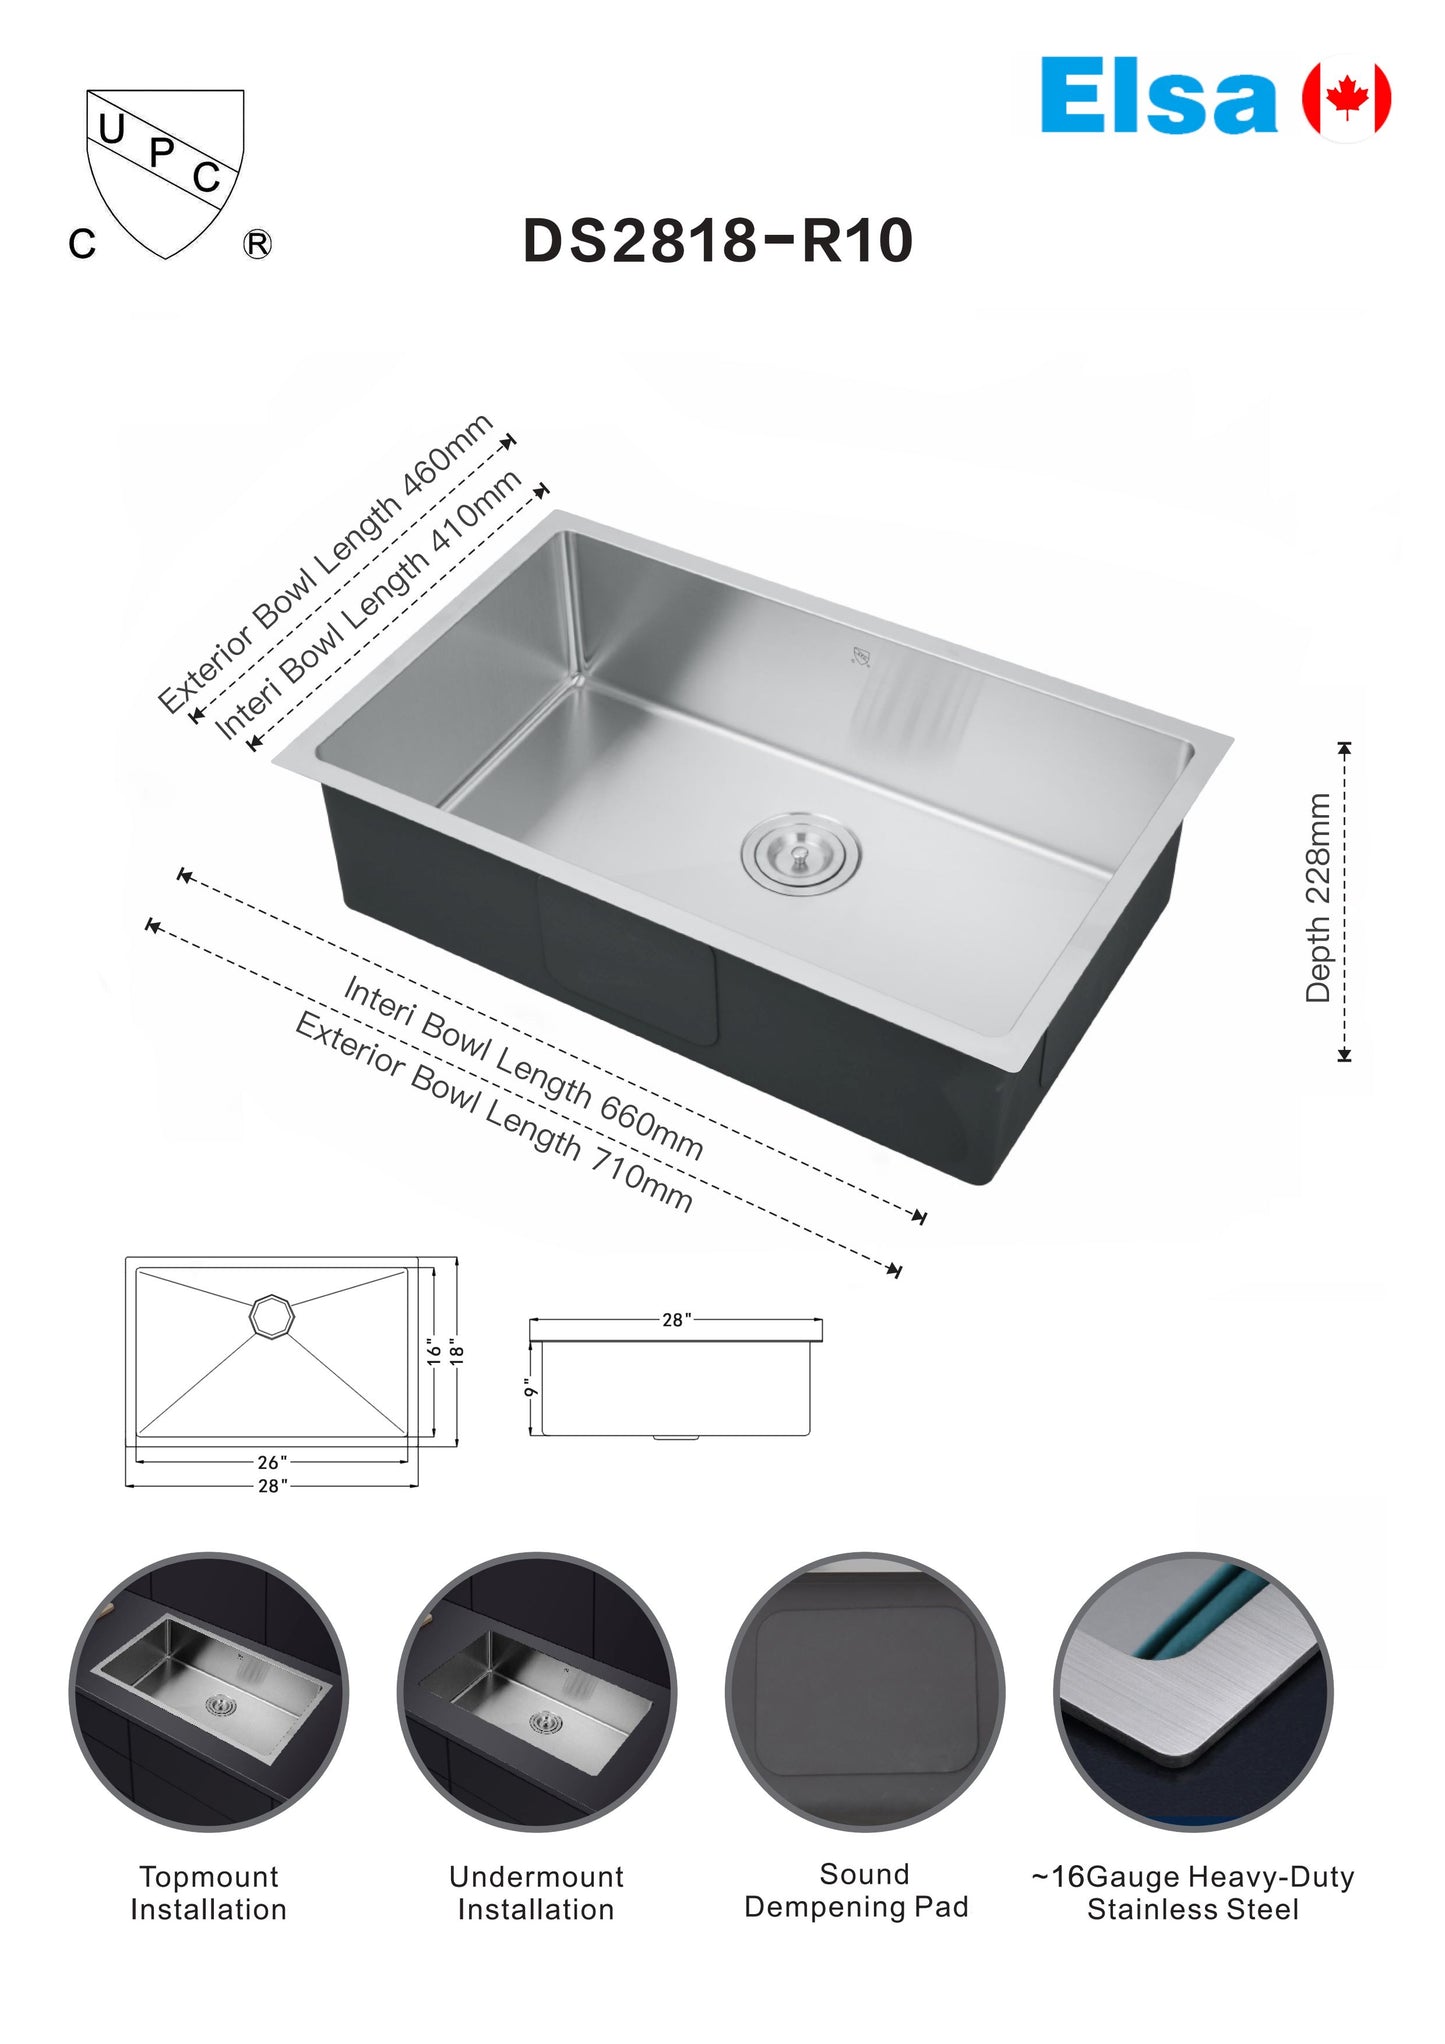 *BULK DEAL* WHITE BOX DS2818-R10 handmade kitchen sink undermount single bowl (drains not included) 710x460x228mm exterior 28"x18"x9" interior 26"x16"x9" $139/pc bulk Deal 10pcs+ $129/pc